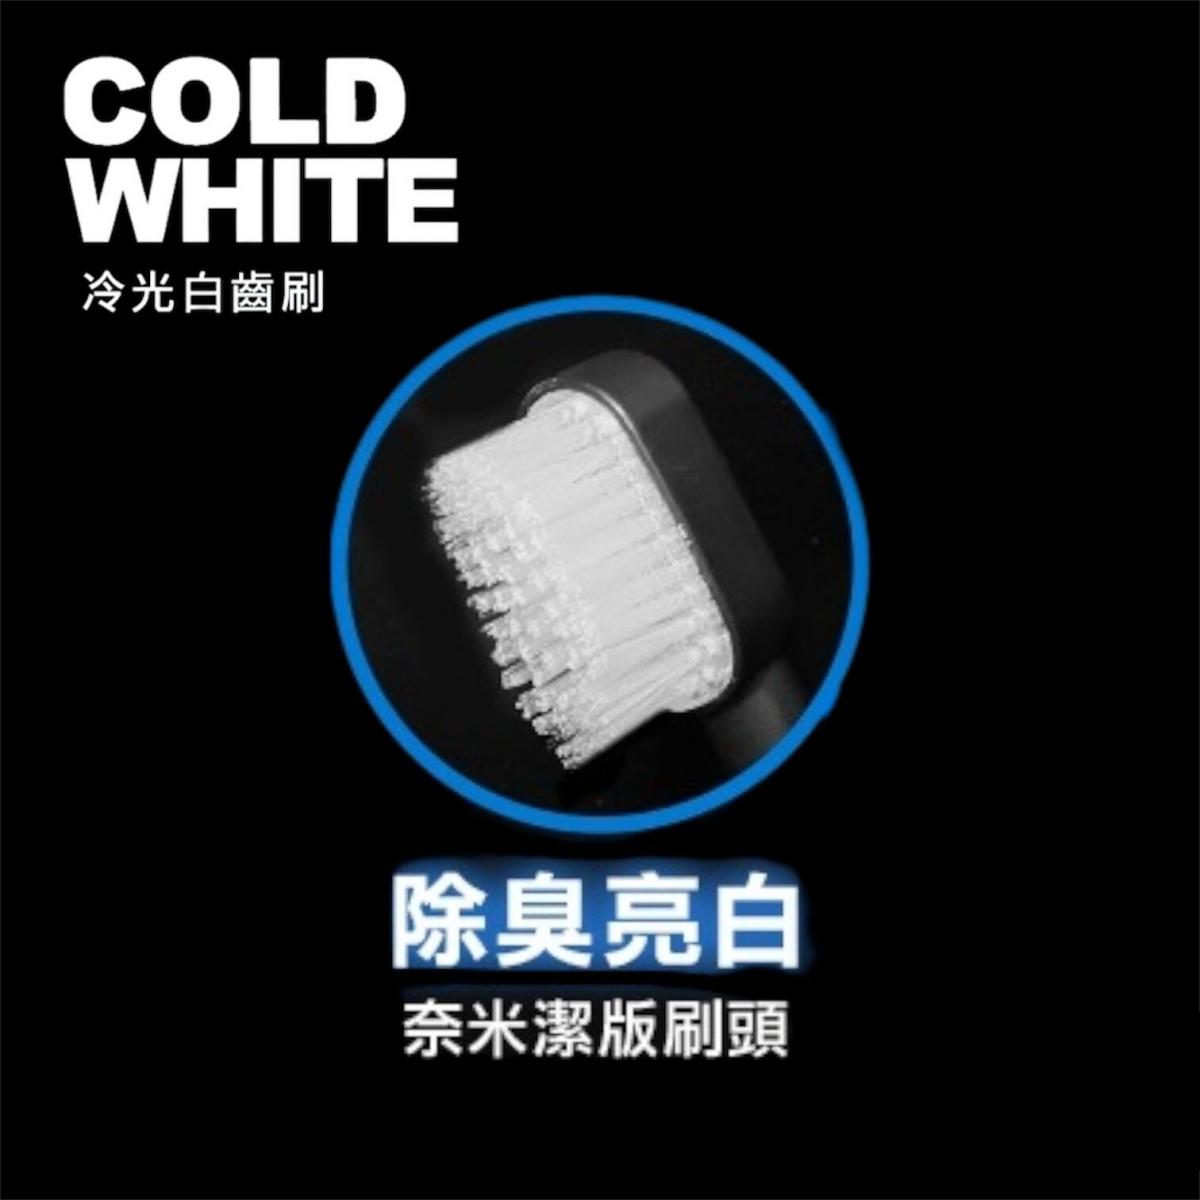 Future Lab - Cold White 冷光白齒刷專用 奈米潔版刷頭補充包 (3個)